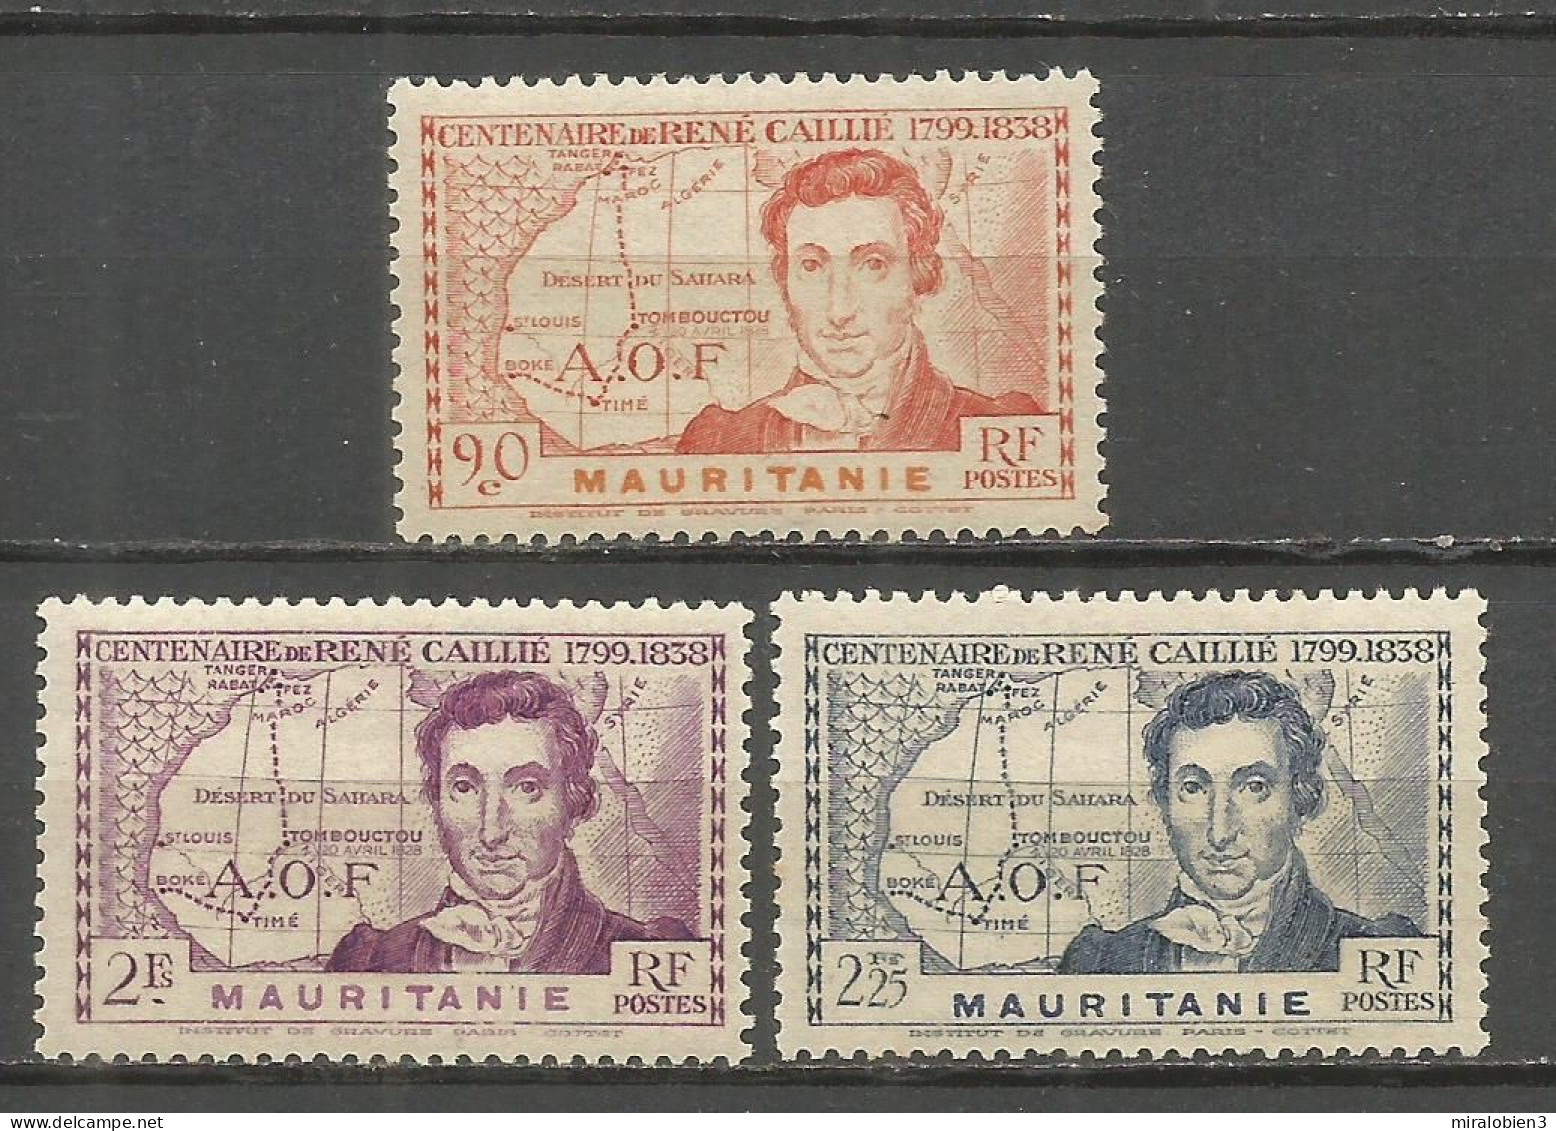 MAURITANIA COLONIA FRANCESA YVERT NUM. 95 * SERIE COMPLETA CON FIJASELLOS - Unused Stamps